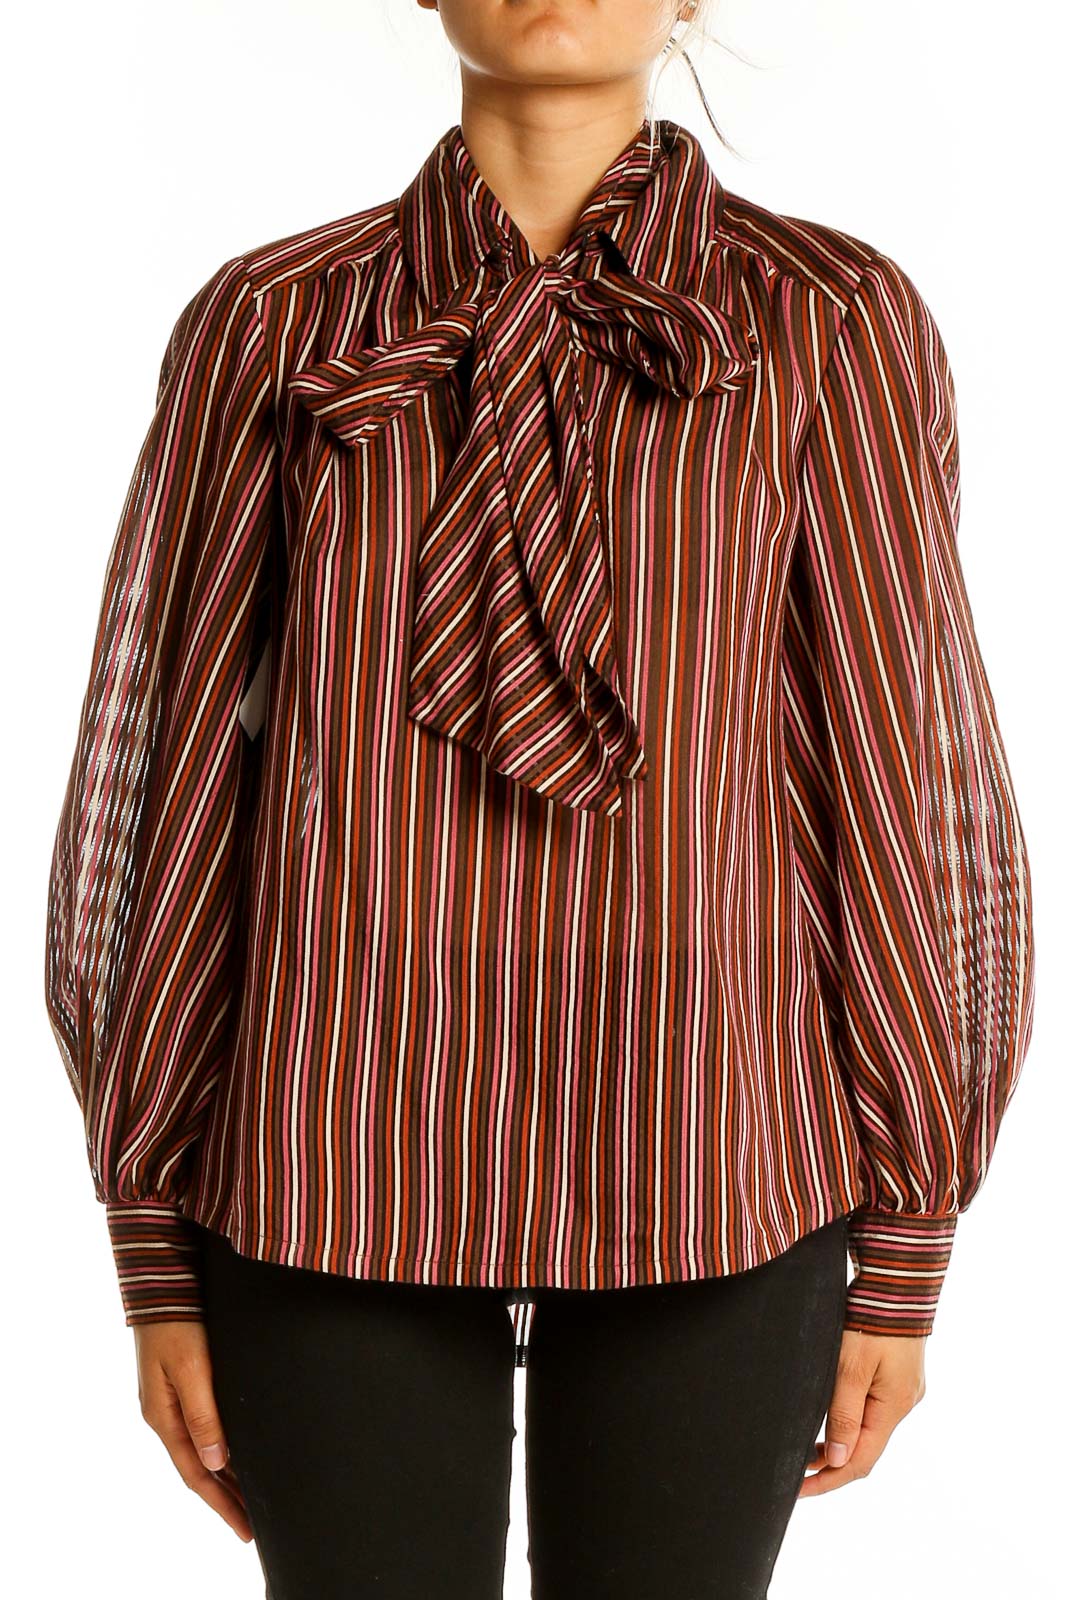 Brown Bengal Stripes Shirt Front